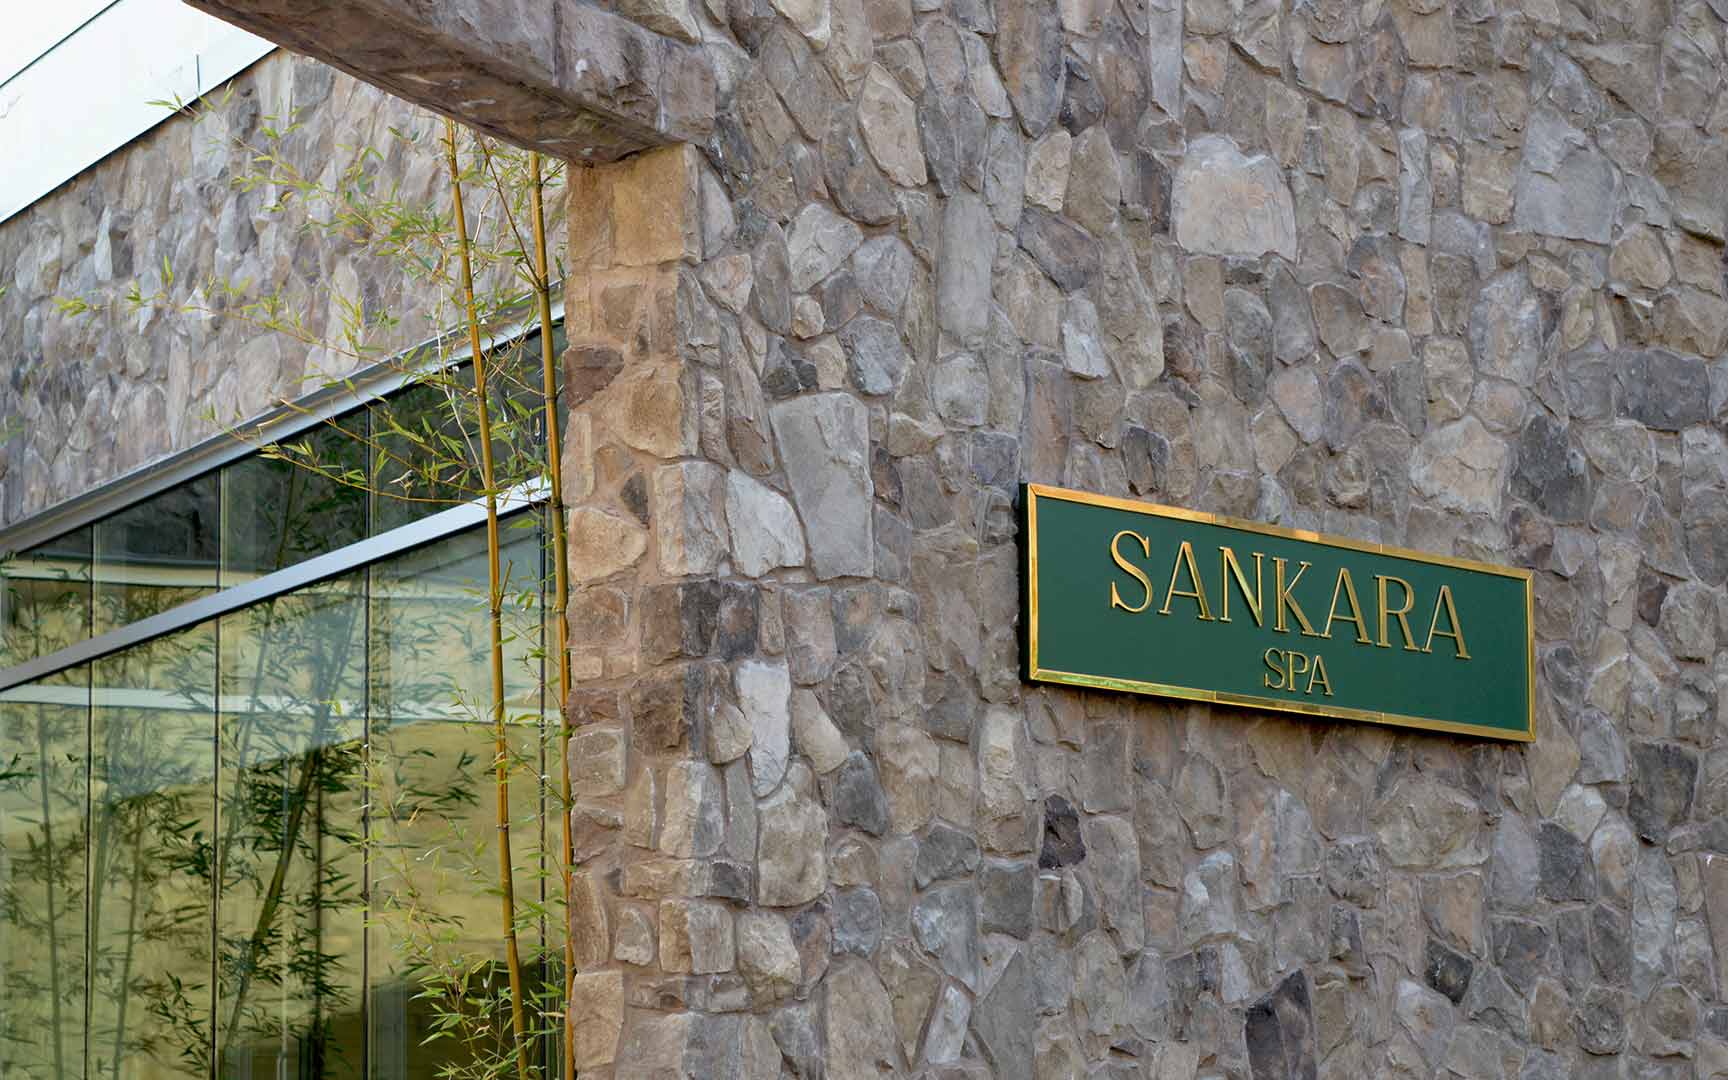 Sankara Spa in Tarrytown, New York